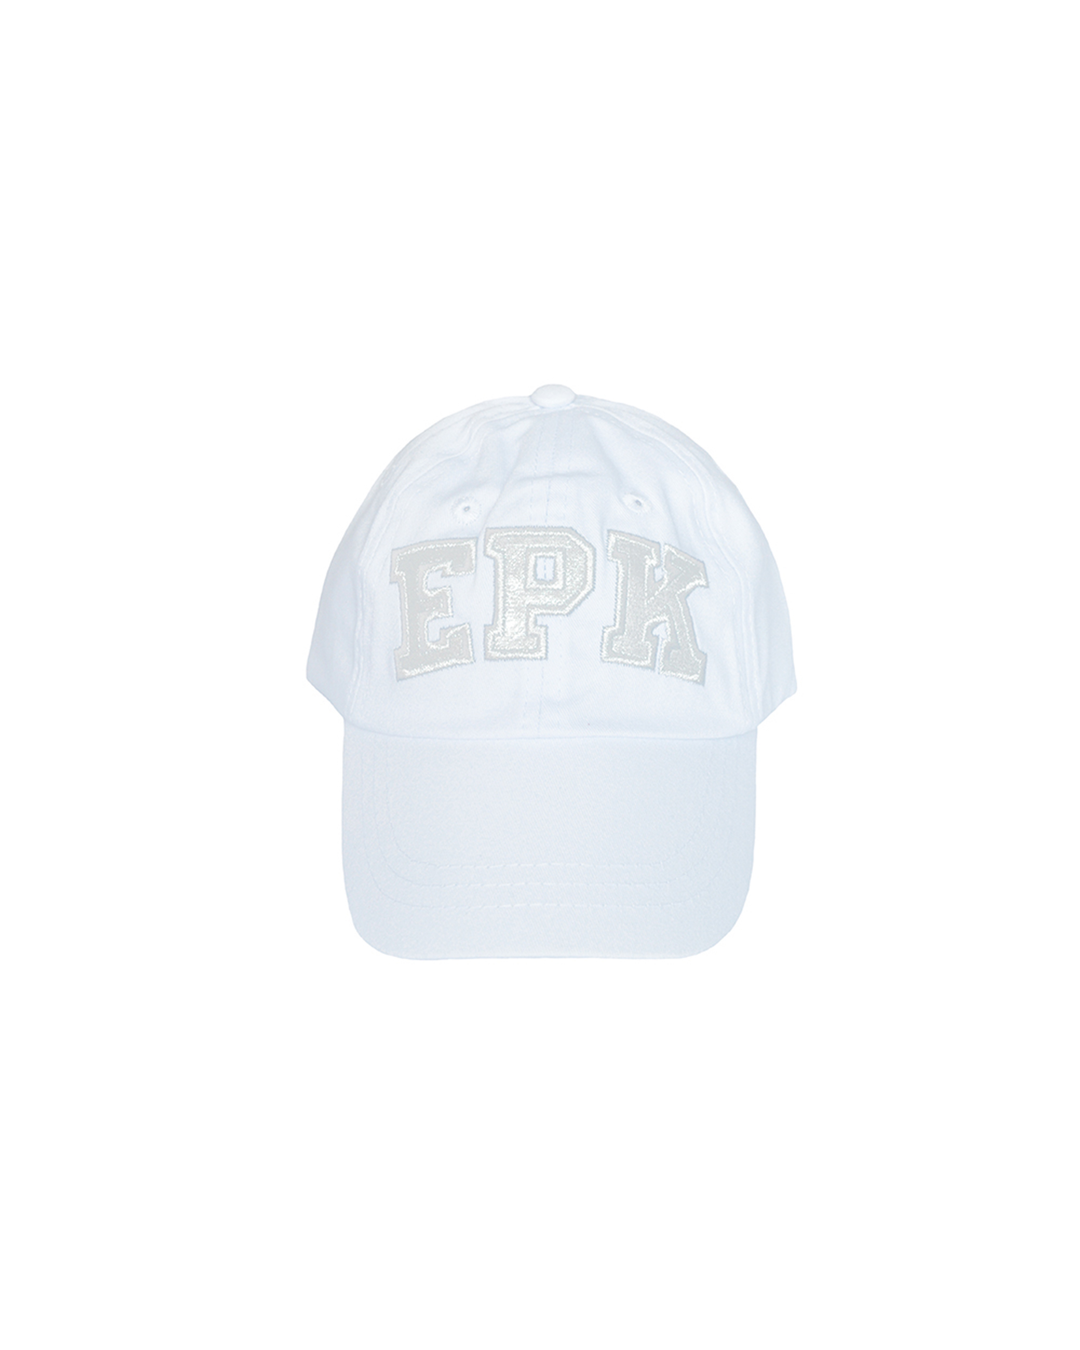 Gorra blanca con EPK en plateado